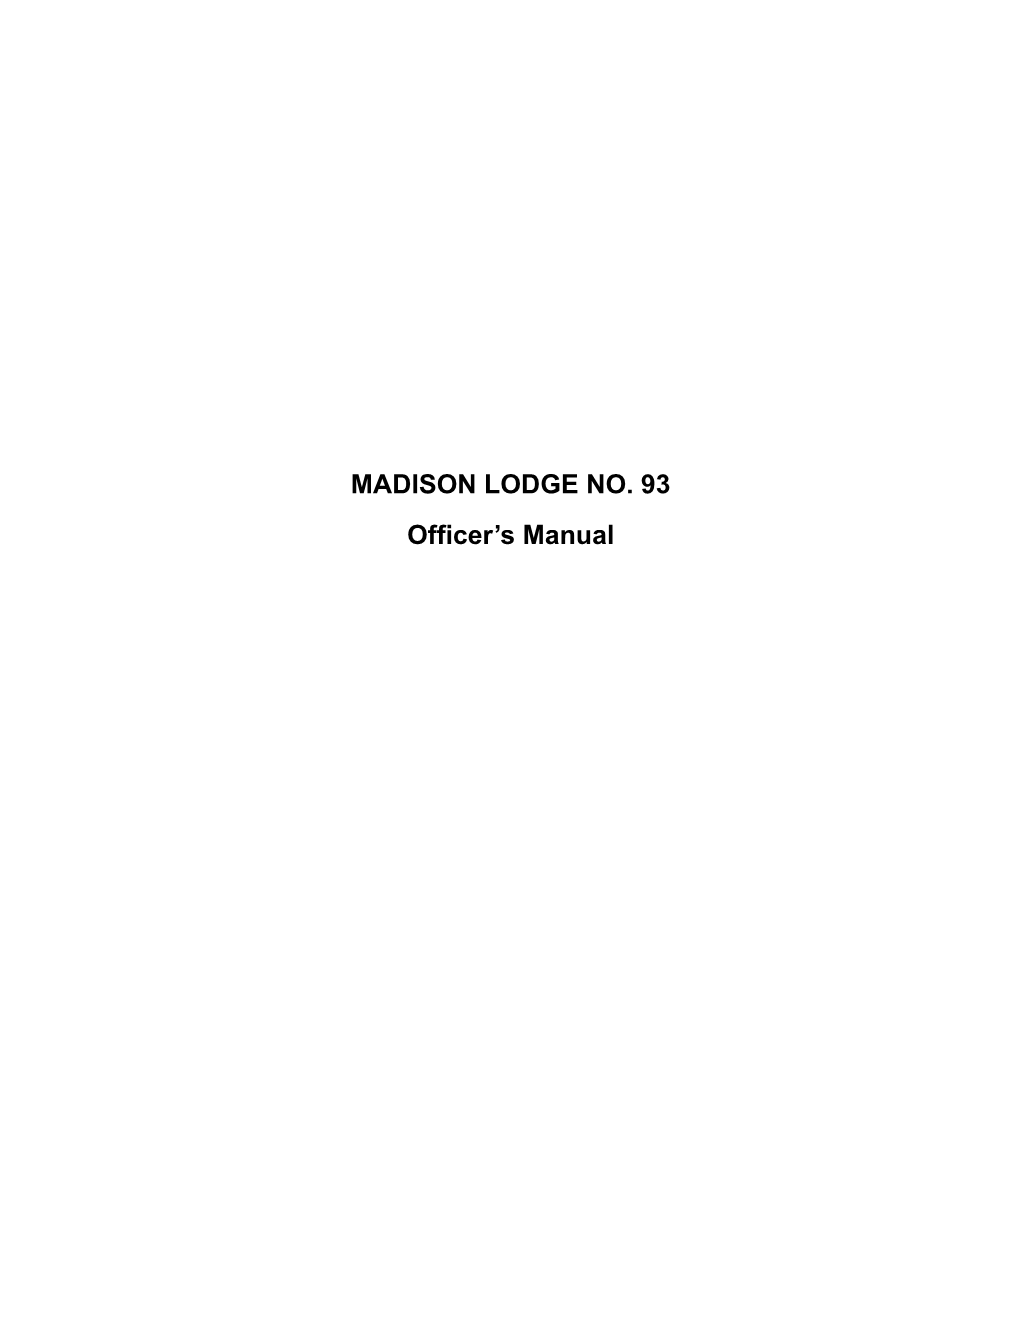 Madison Lodge No